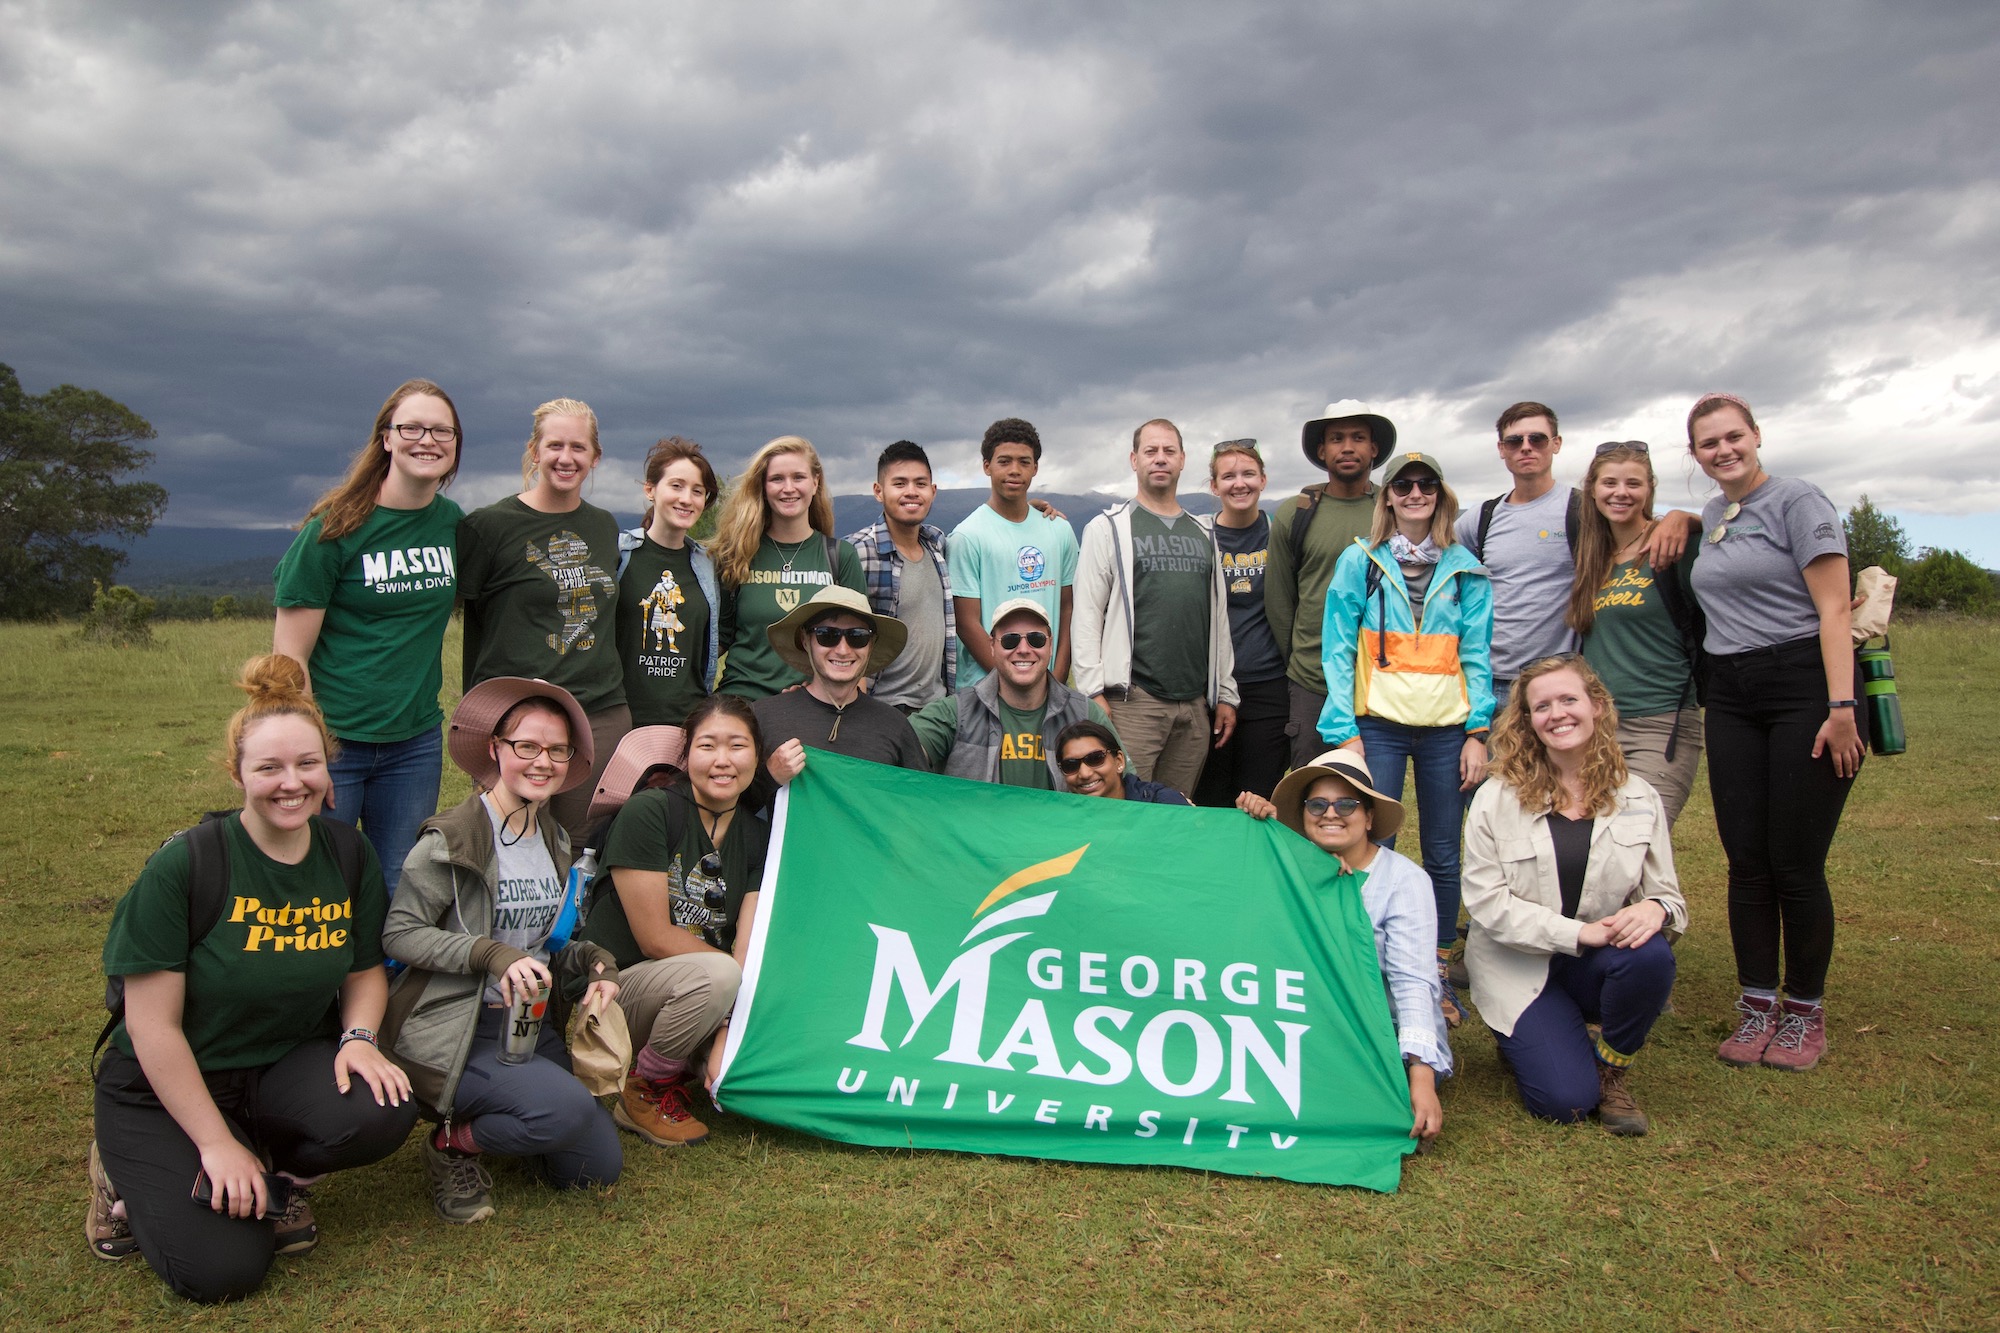 Graduate and undergraduate students in Mason attire holding a green flag that says George Mason University